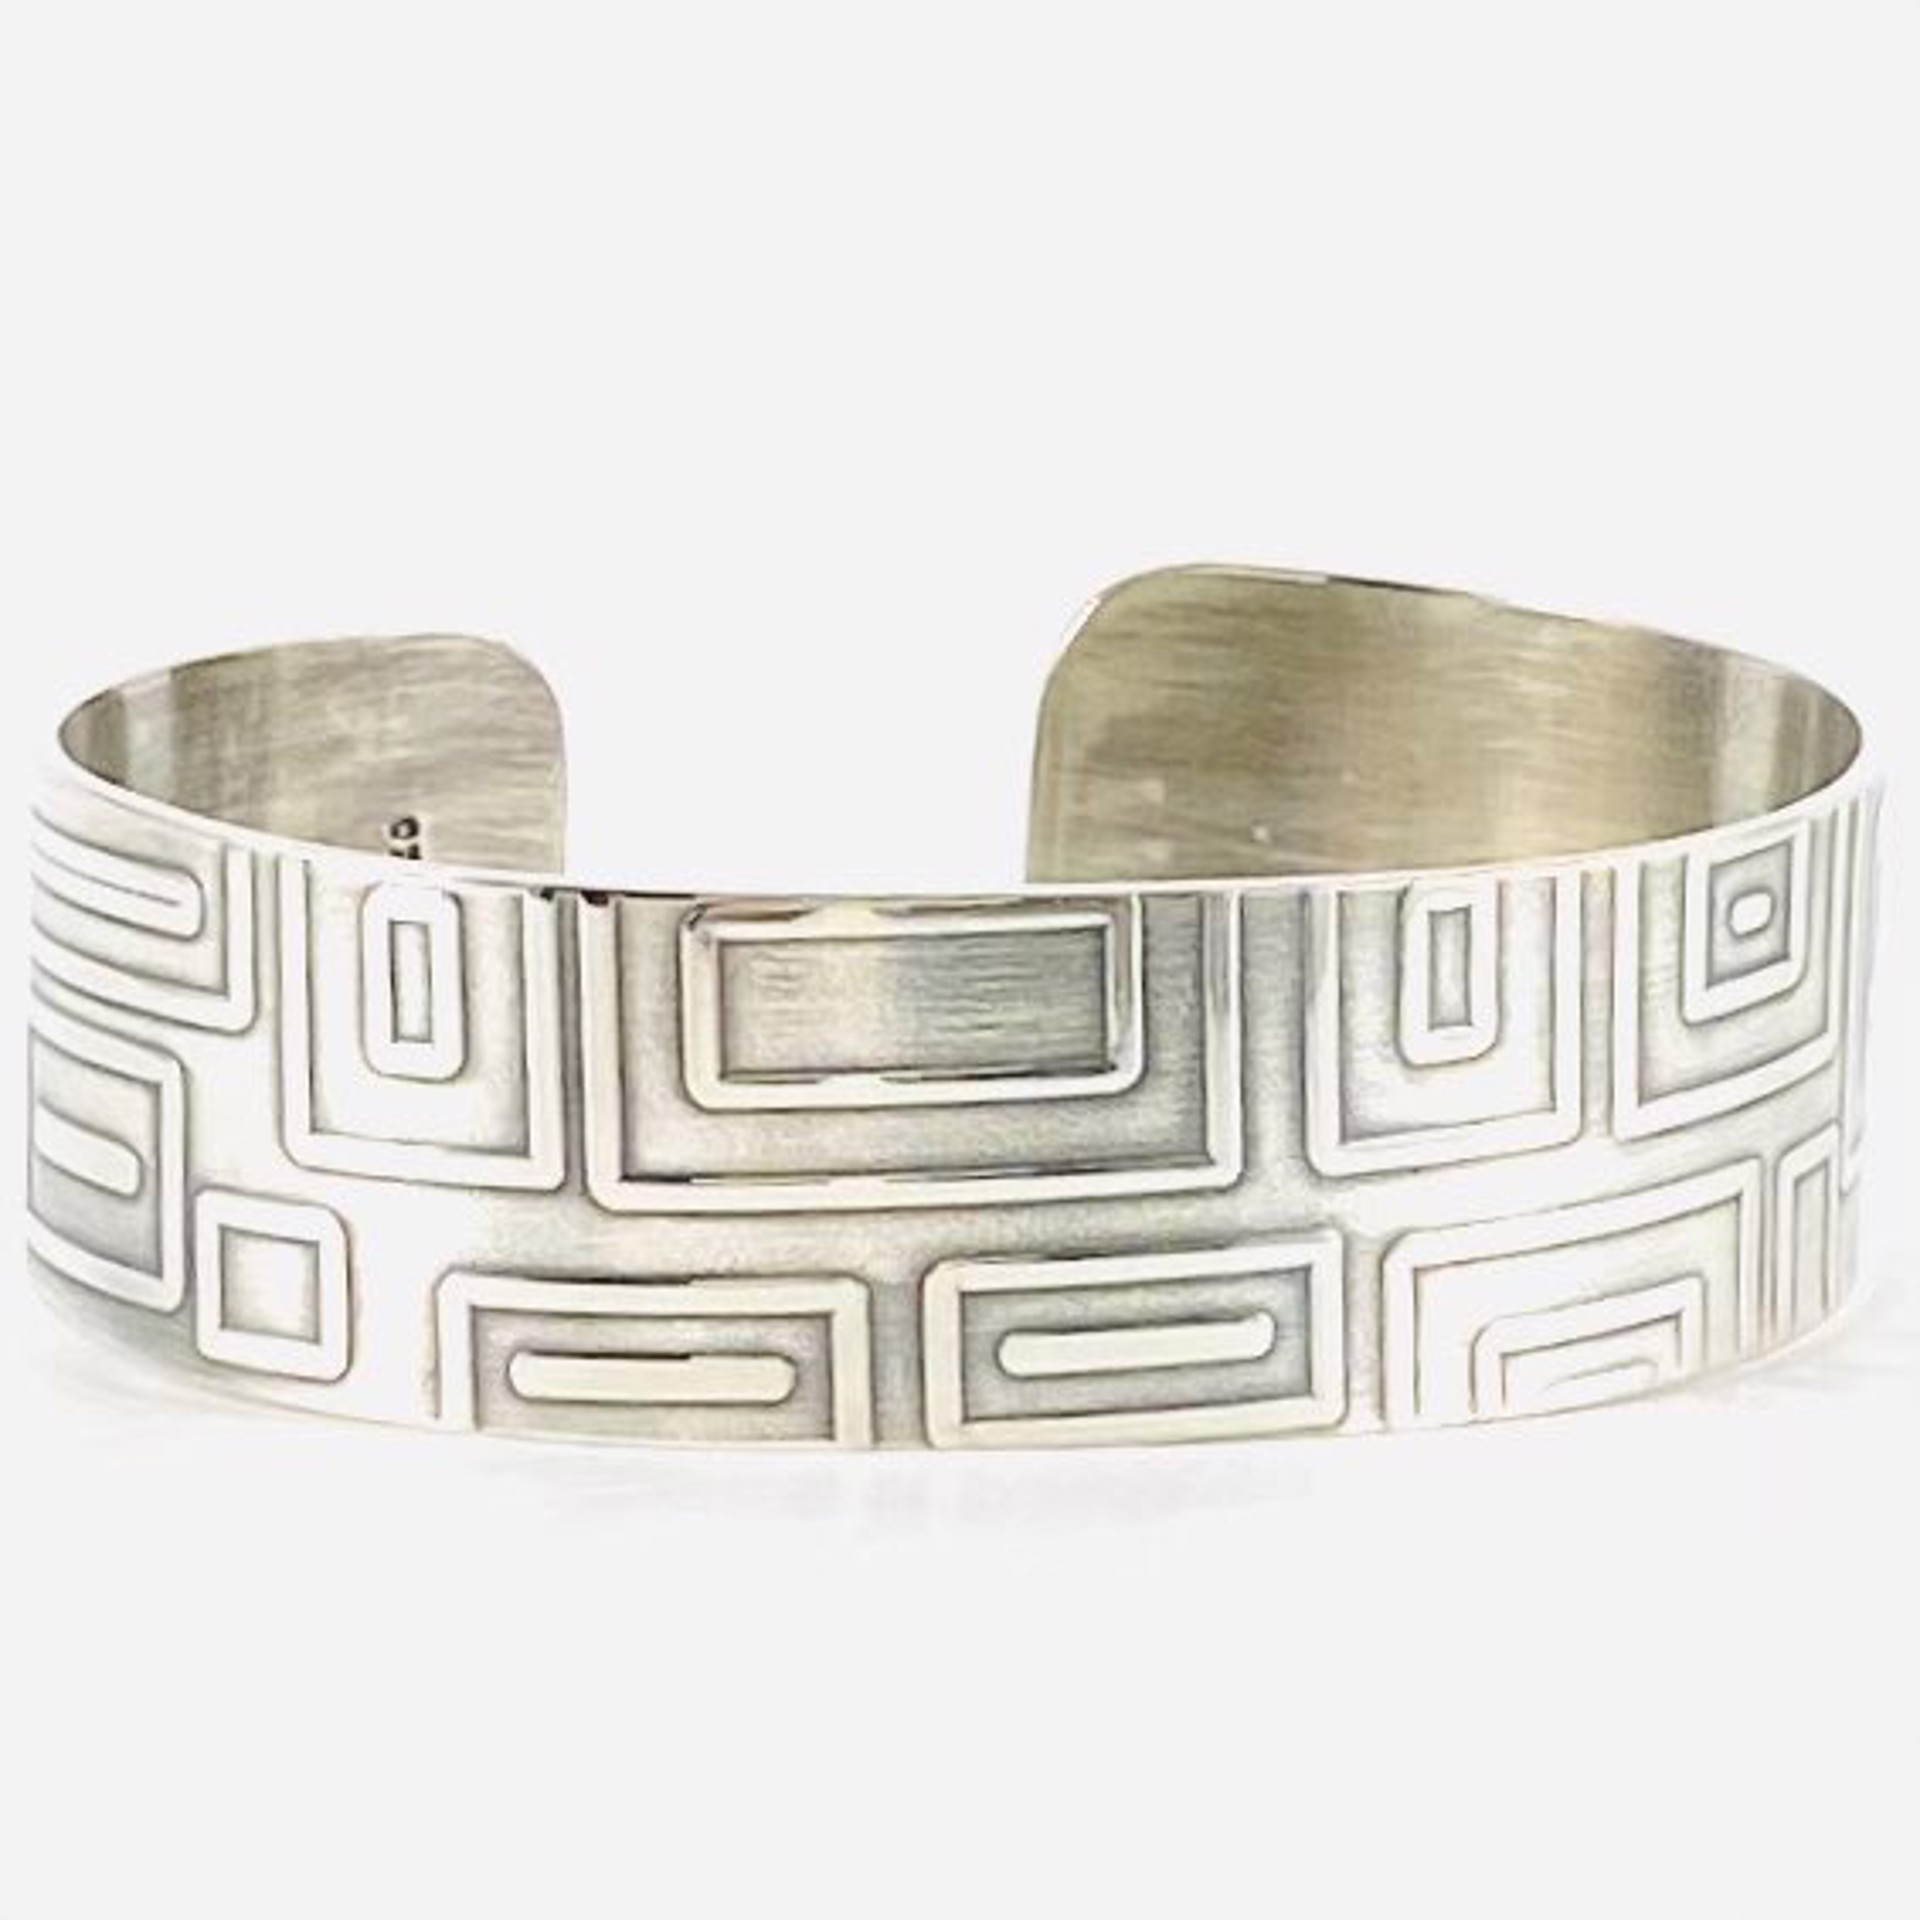 Rolled Geometric Design Silver Cuff Bracelet AB22-76 by Anne Bivens